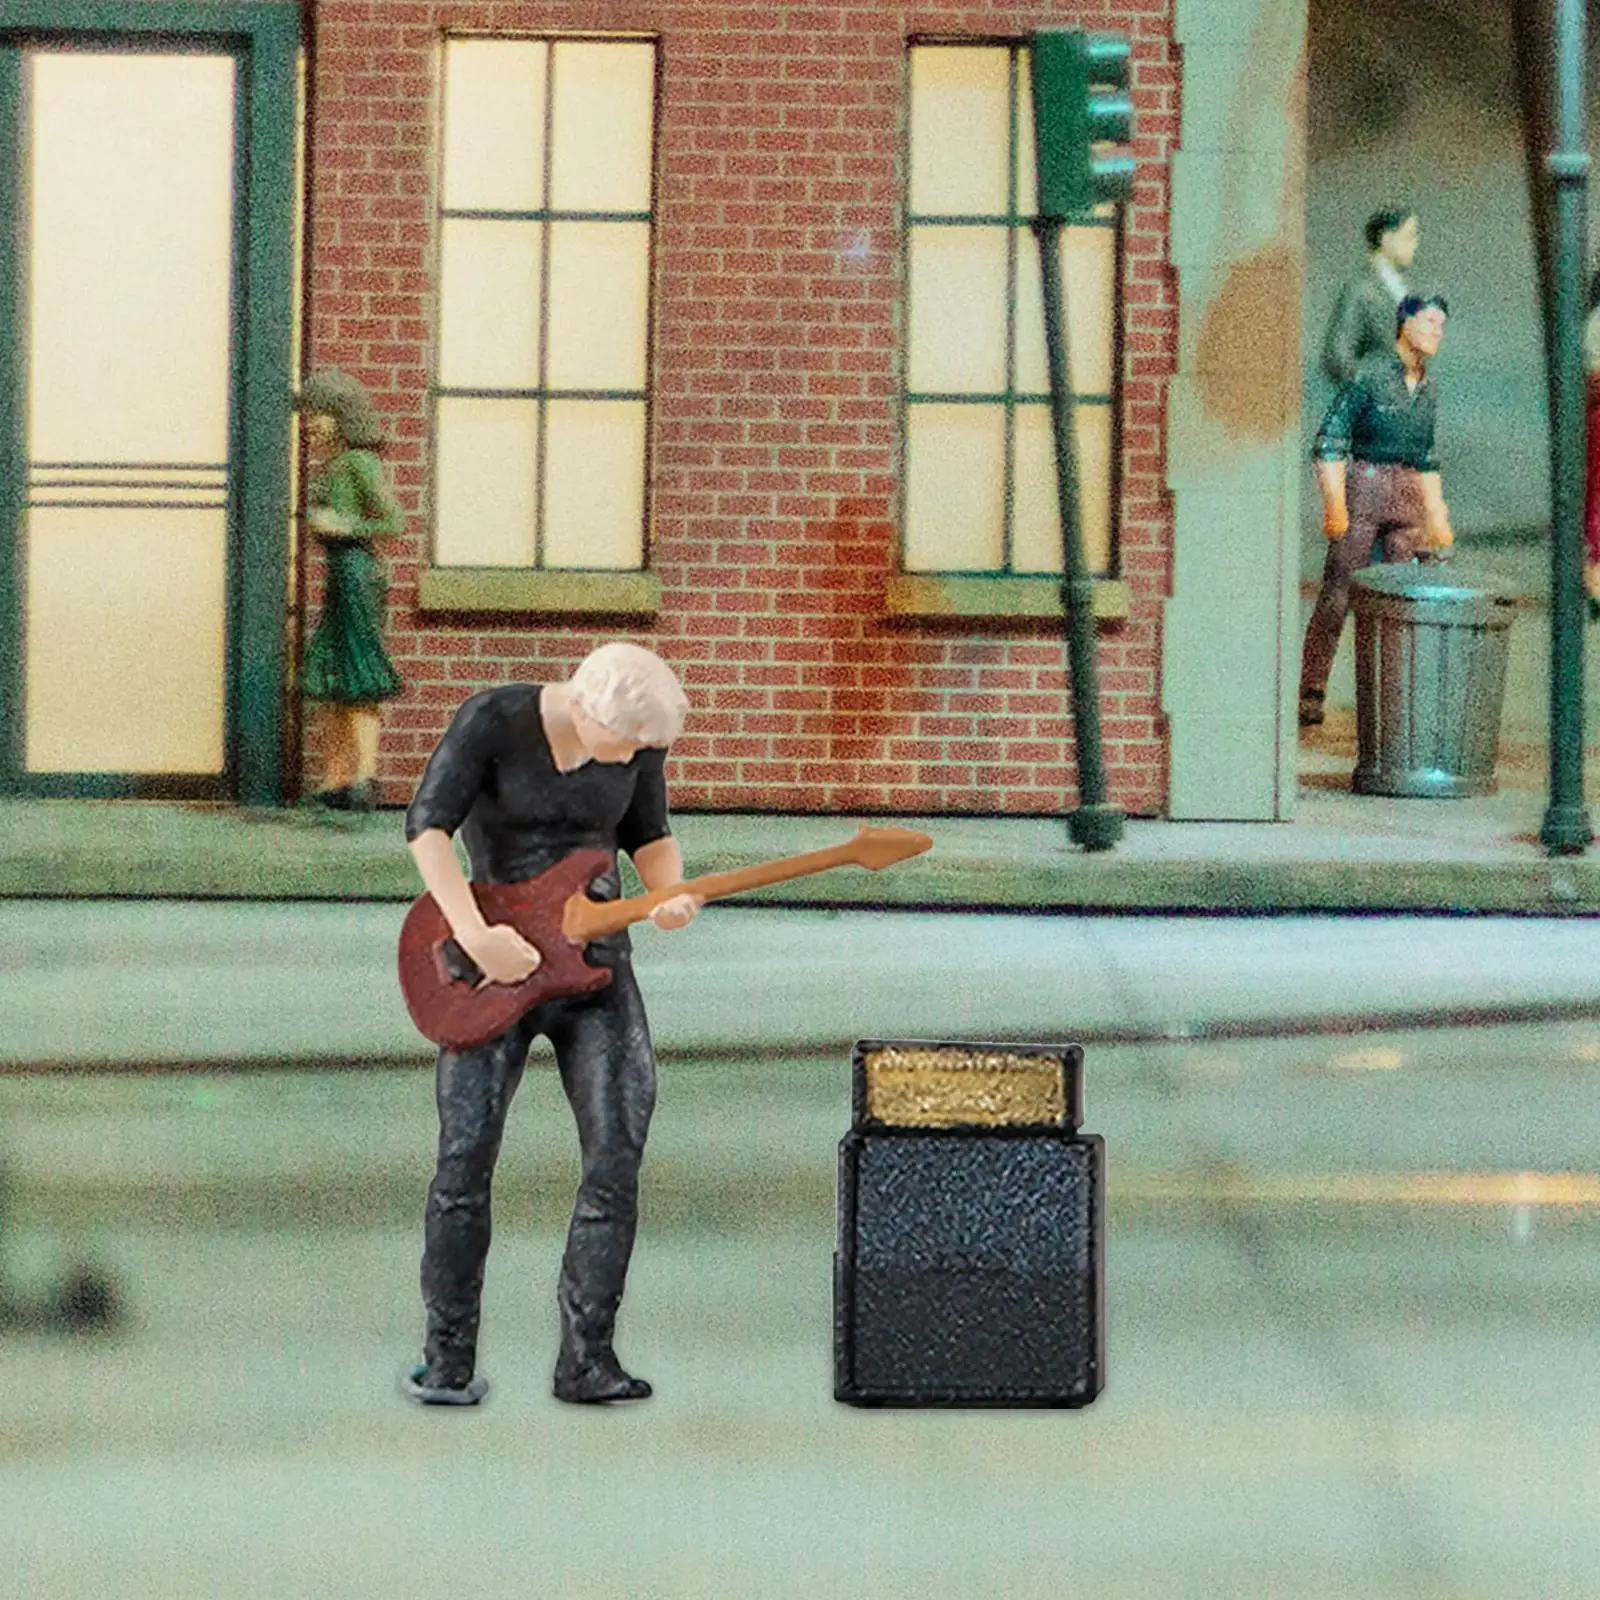 Bassist People Figurine Tiny Character Model for Miniature Scene Desktop Decoration Sand Table Micro Landscape Train Layout